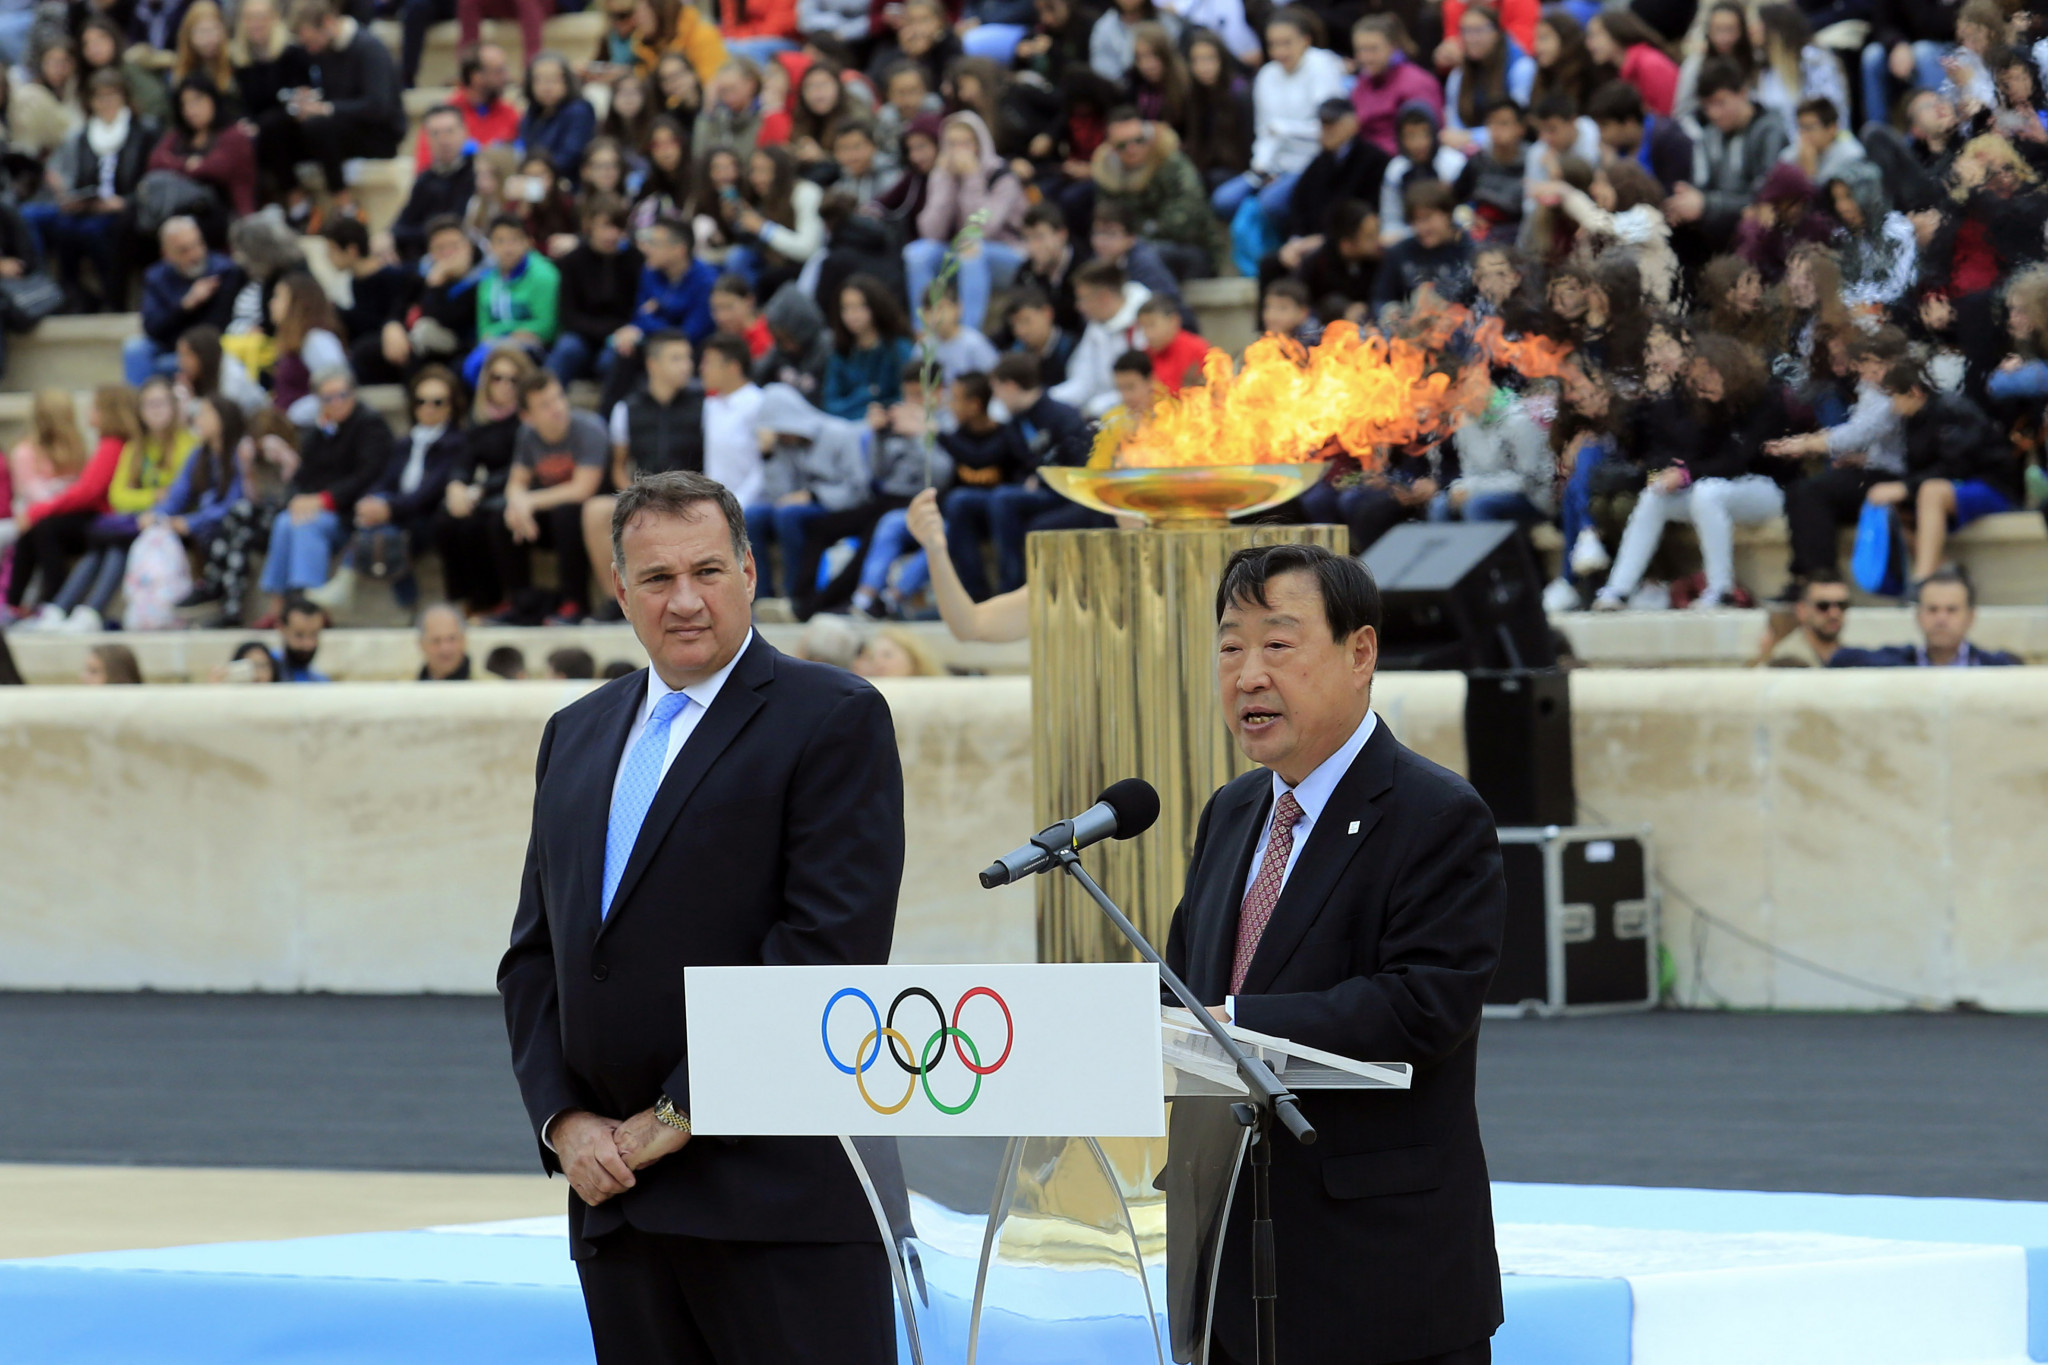 Olympic flame handed to Pyeongchang 2018